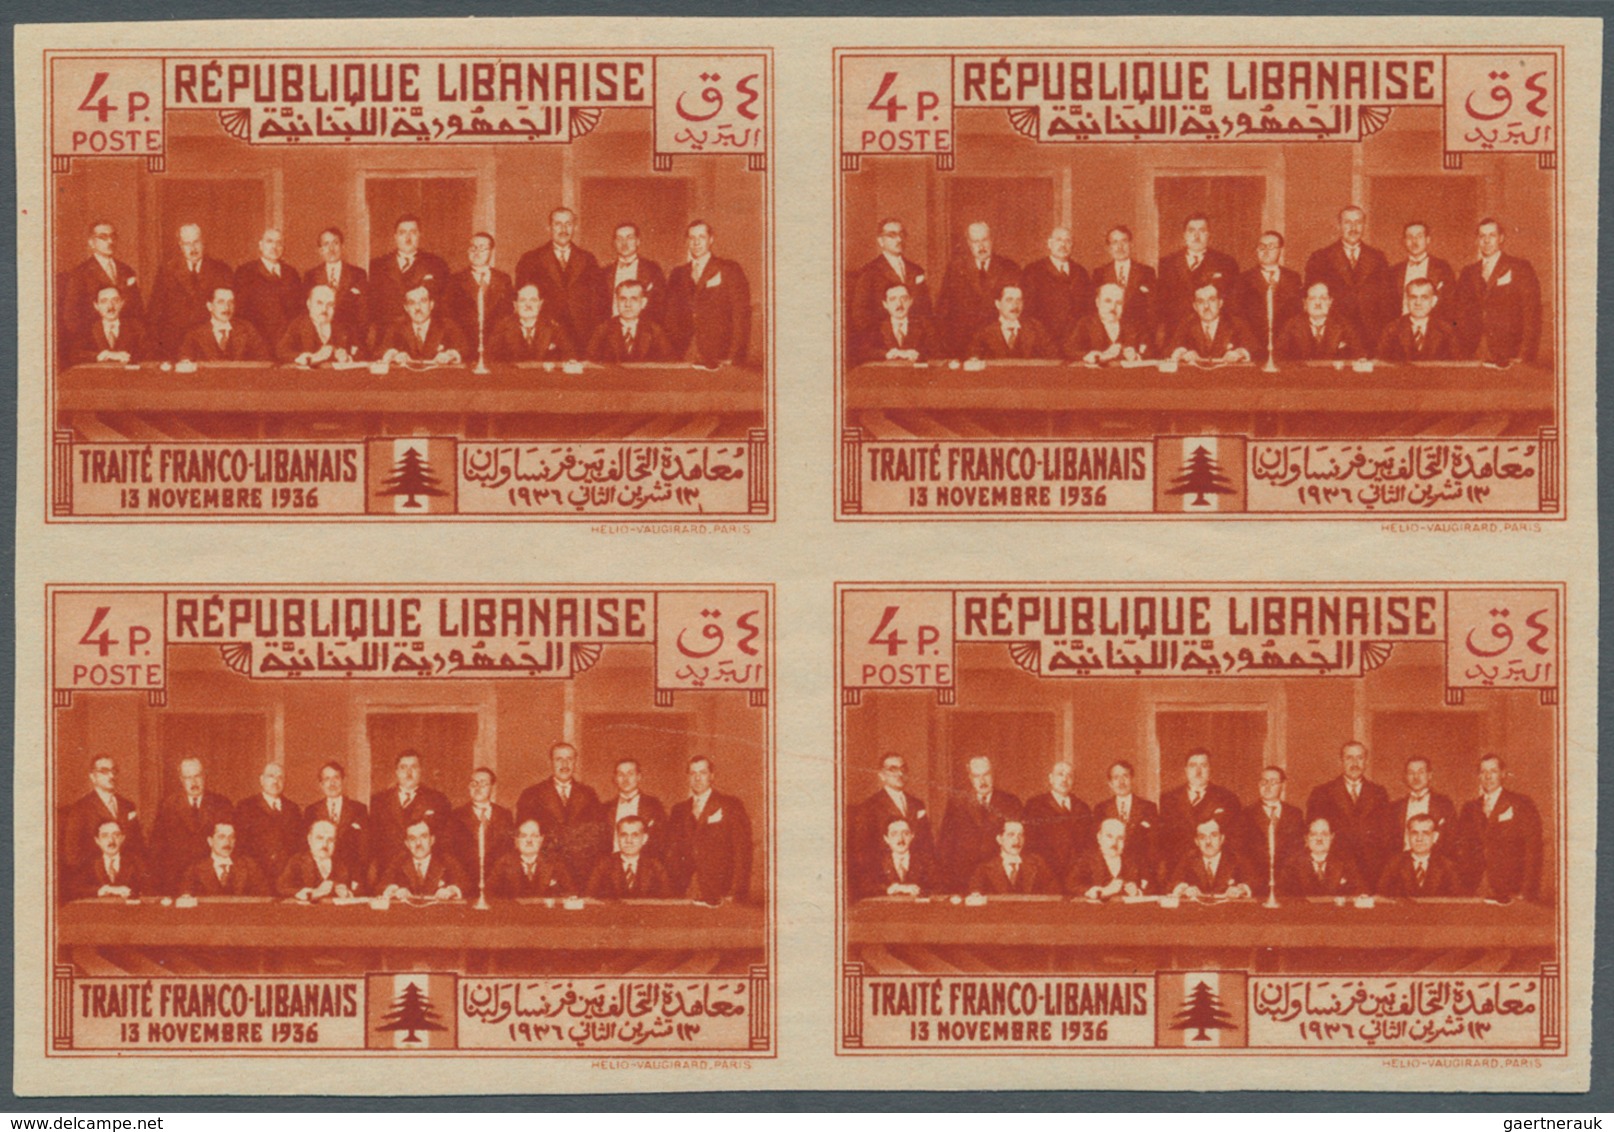 Libanon: 1936, Franco-Lebanese Treaty, Not Issued, Complete Set Of Five Values As IMPERFORATE Blocks - Lebanon